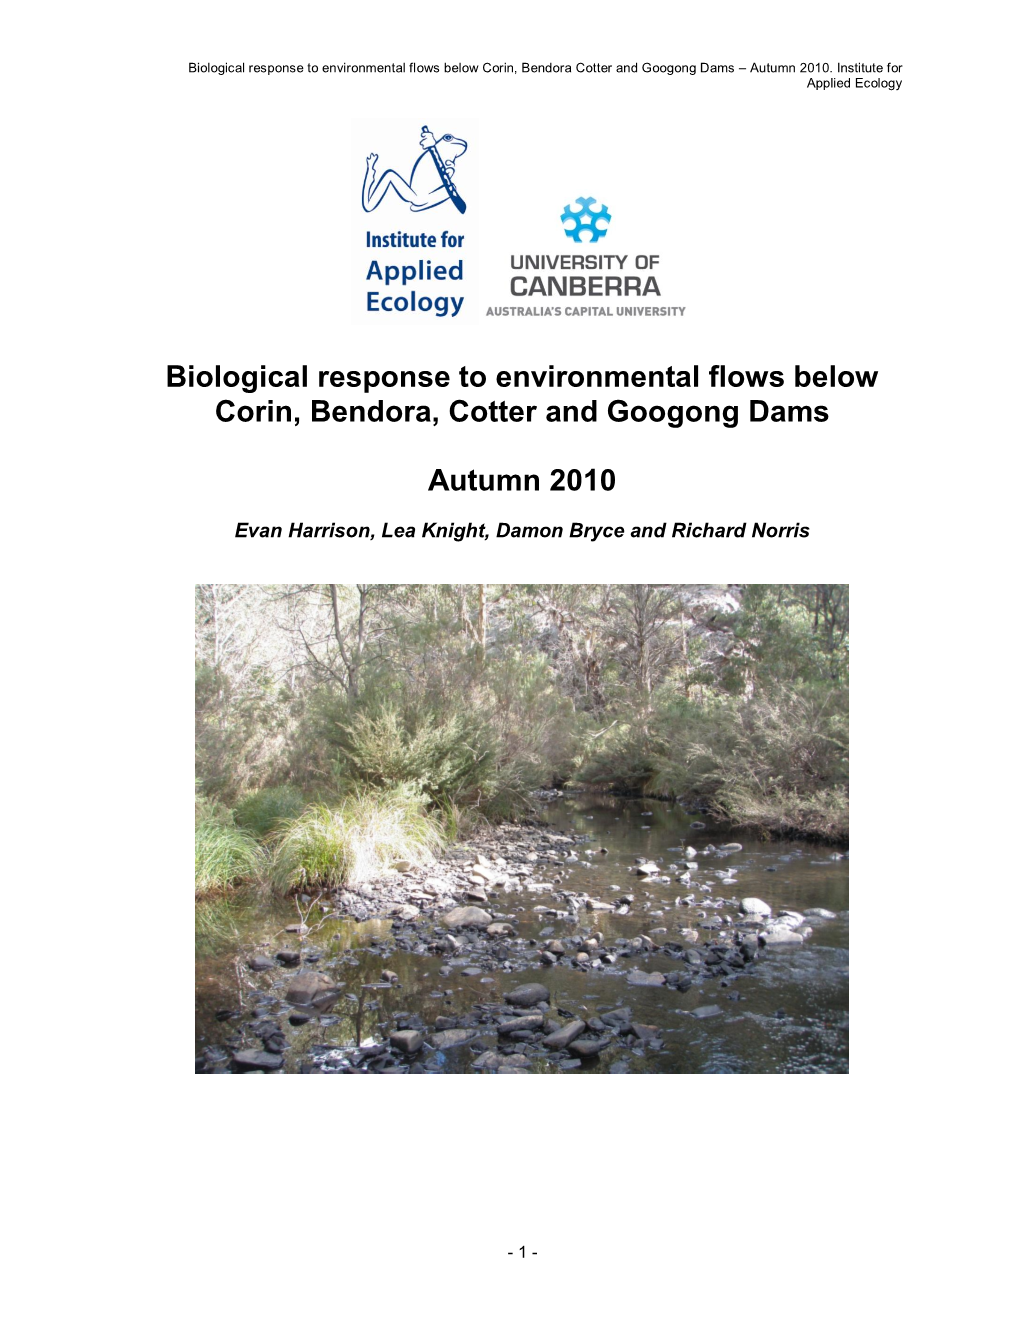 Biological Response to Environmental Flows Below Corin, Bendora, Cotter and Googong Dams